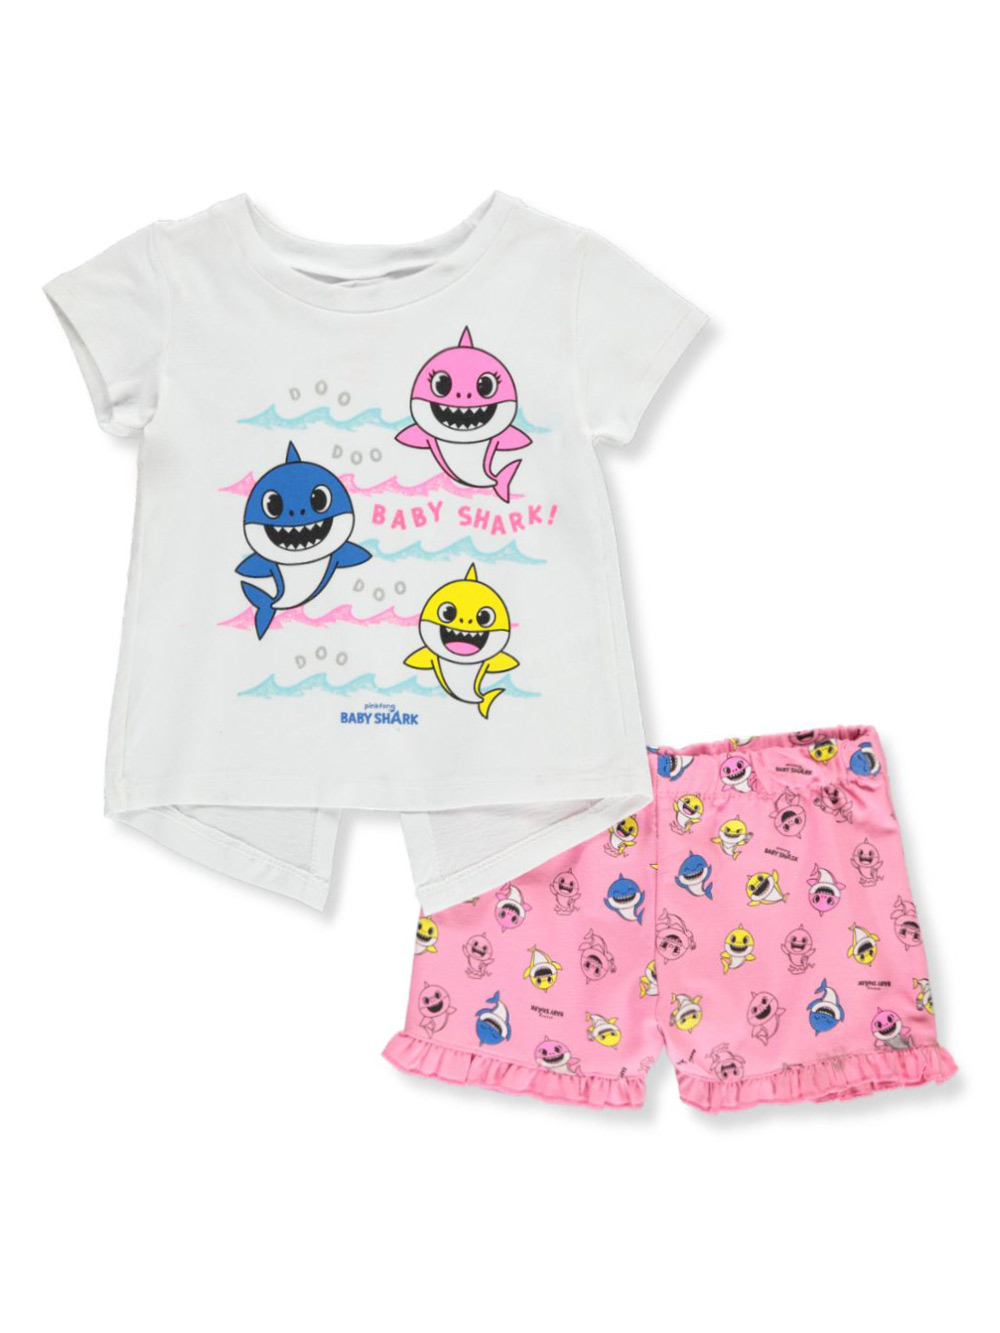 Pinkfong Baby Shark Shirt - baby shark outfit roblox